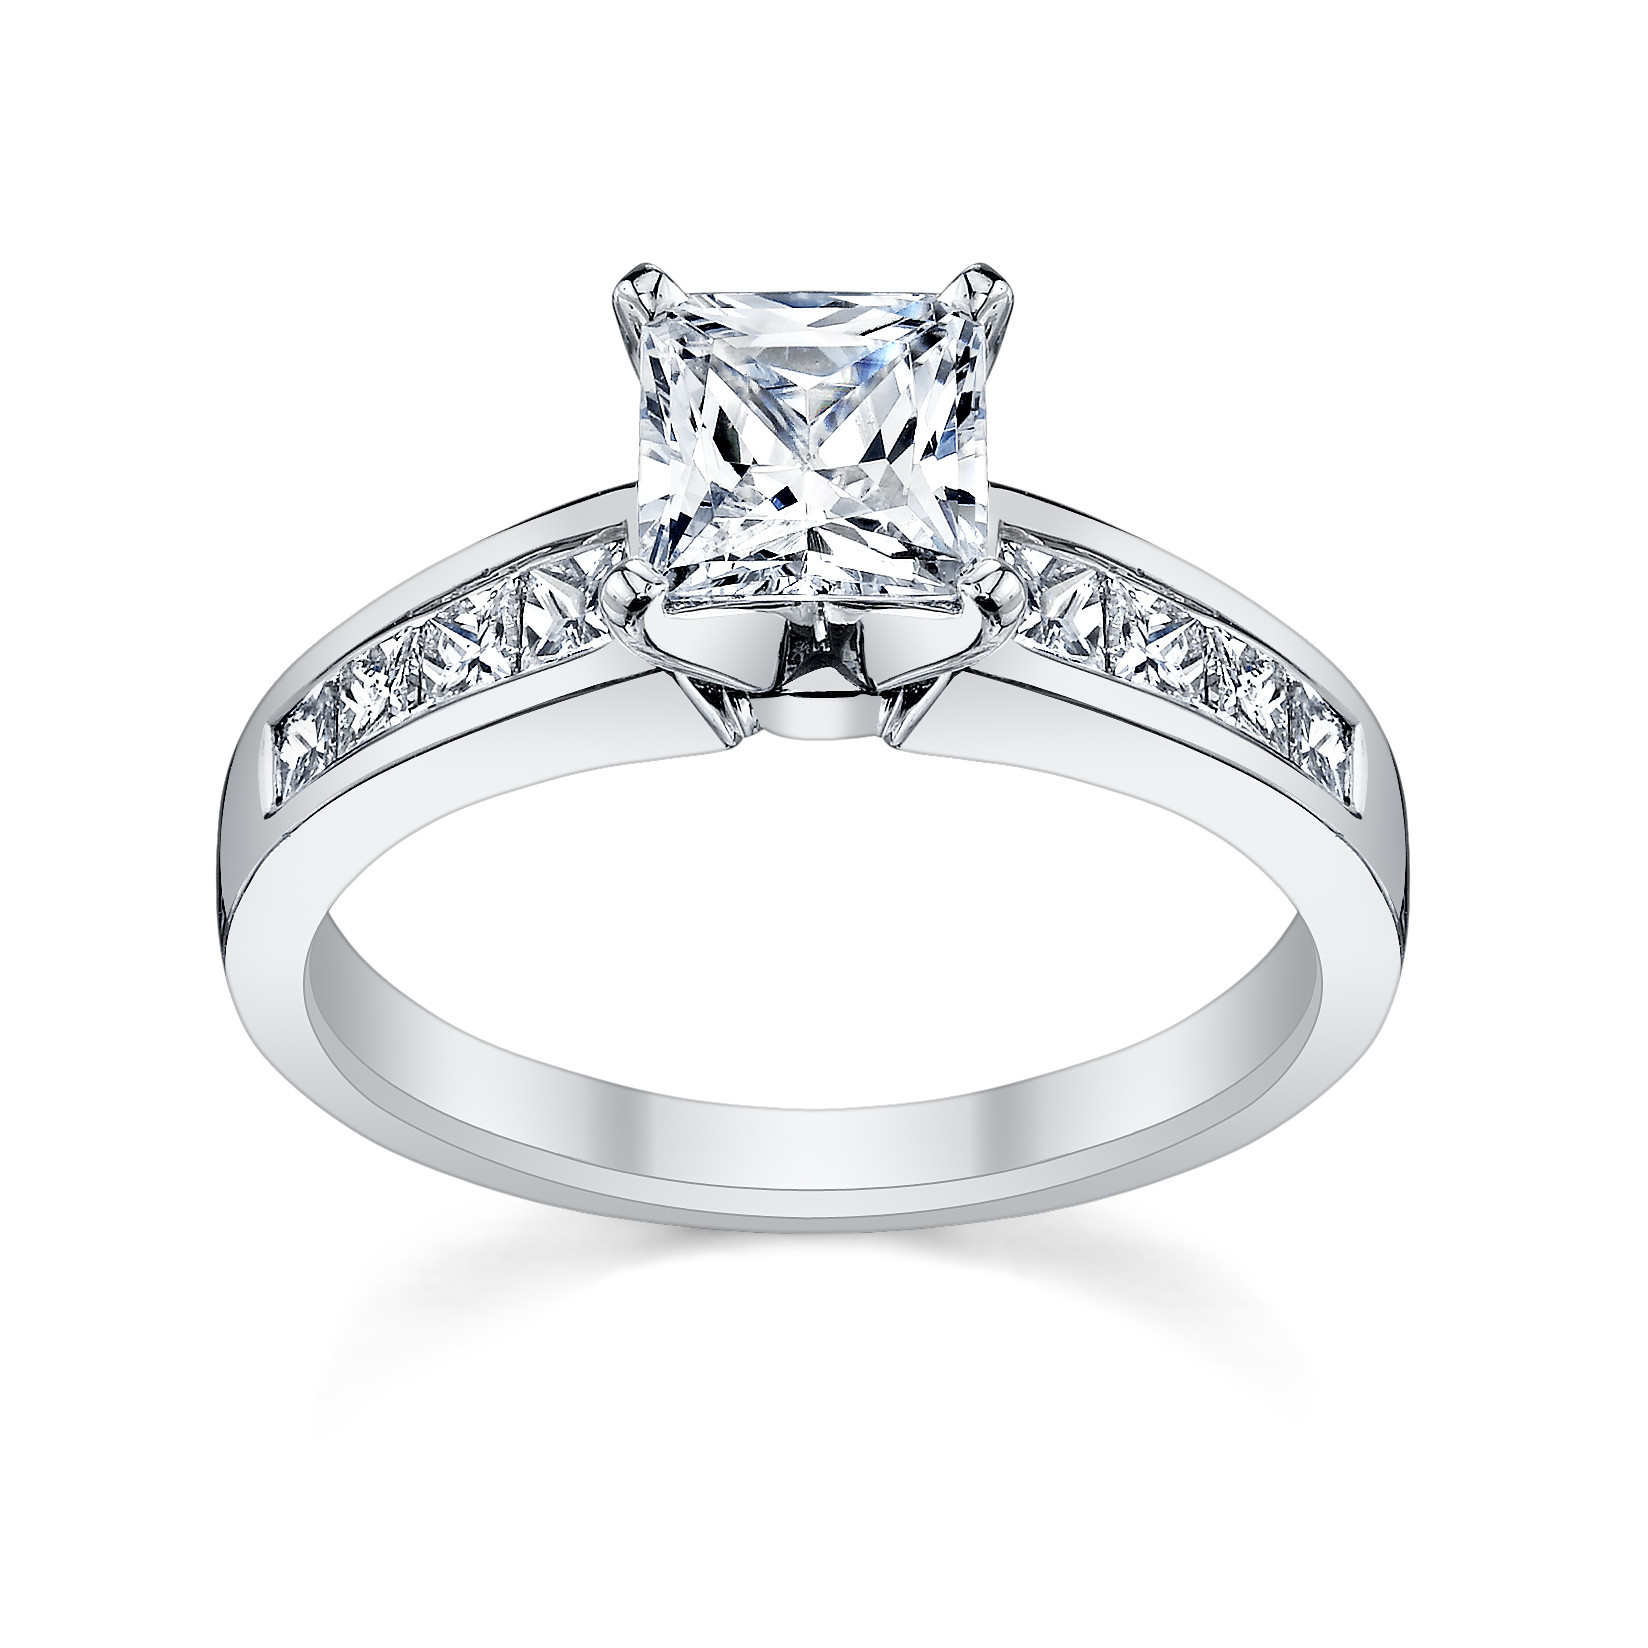 Princess Cut Wedding Rings
 6 Princess Cut Engagement Rings She ll Love Robbins